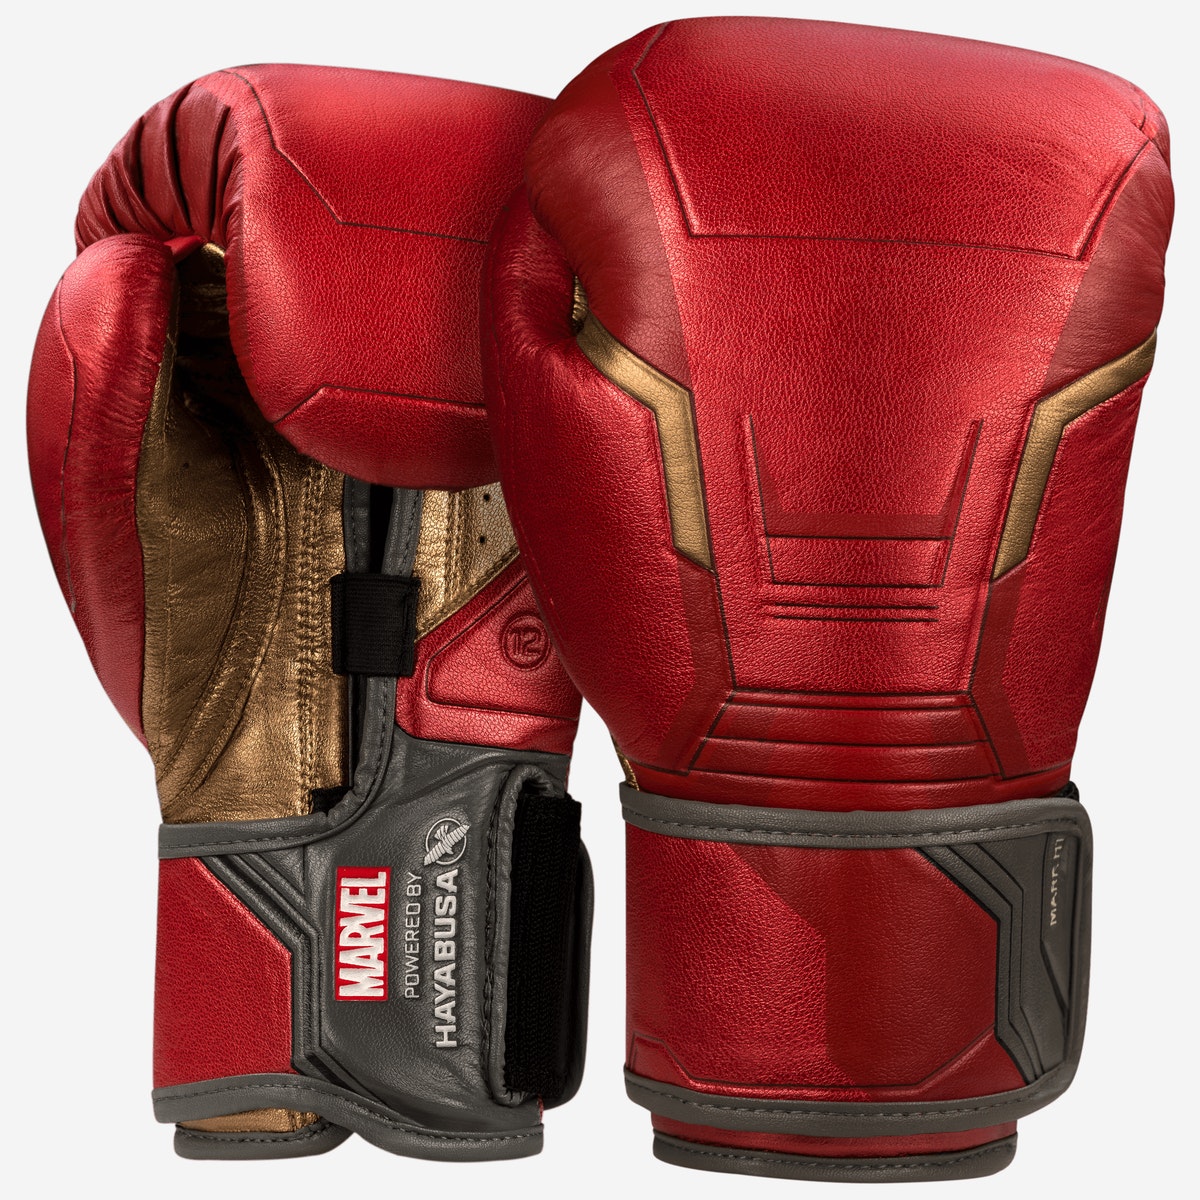 Detail Image Of Boxing Gloves Nomer 10